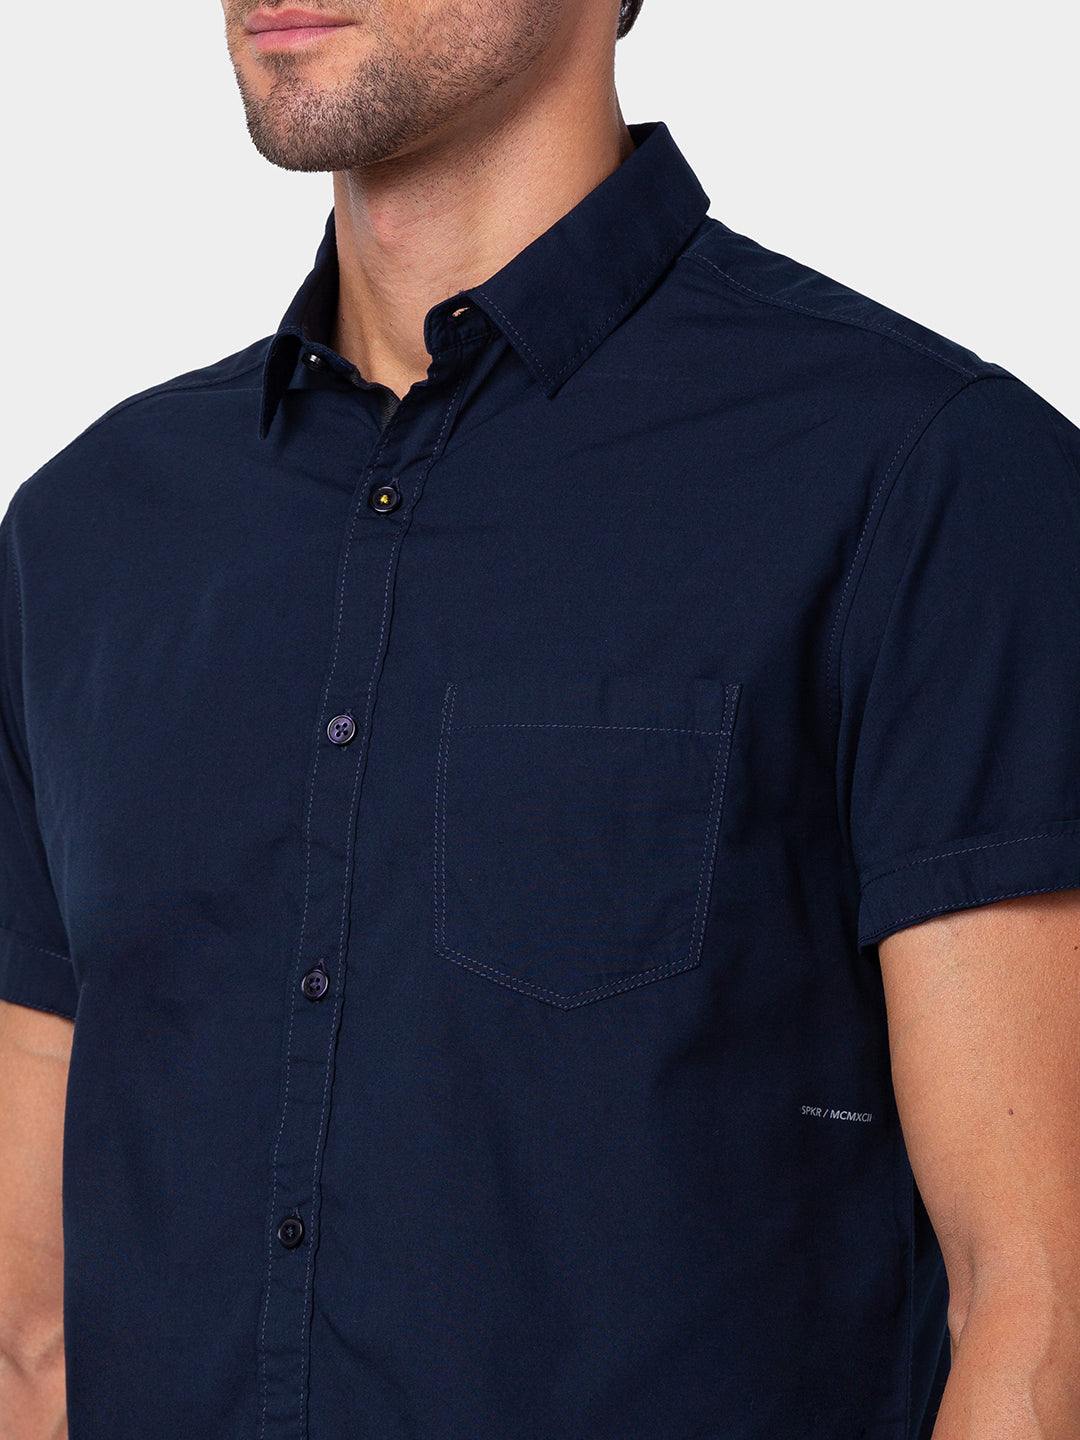 Spykar Men Navy Blue Cotton Slim Fit Plain Shirt